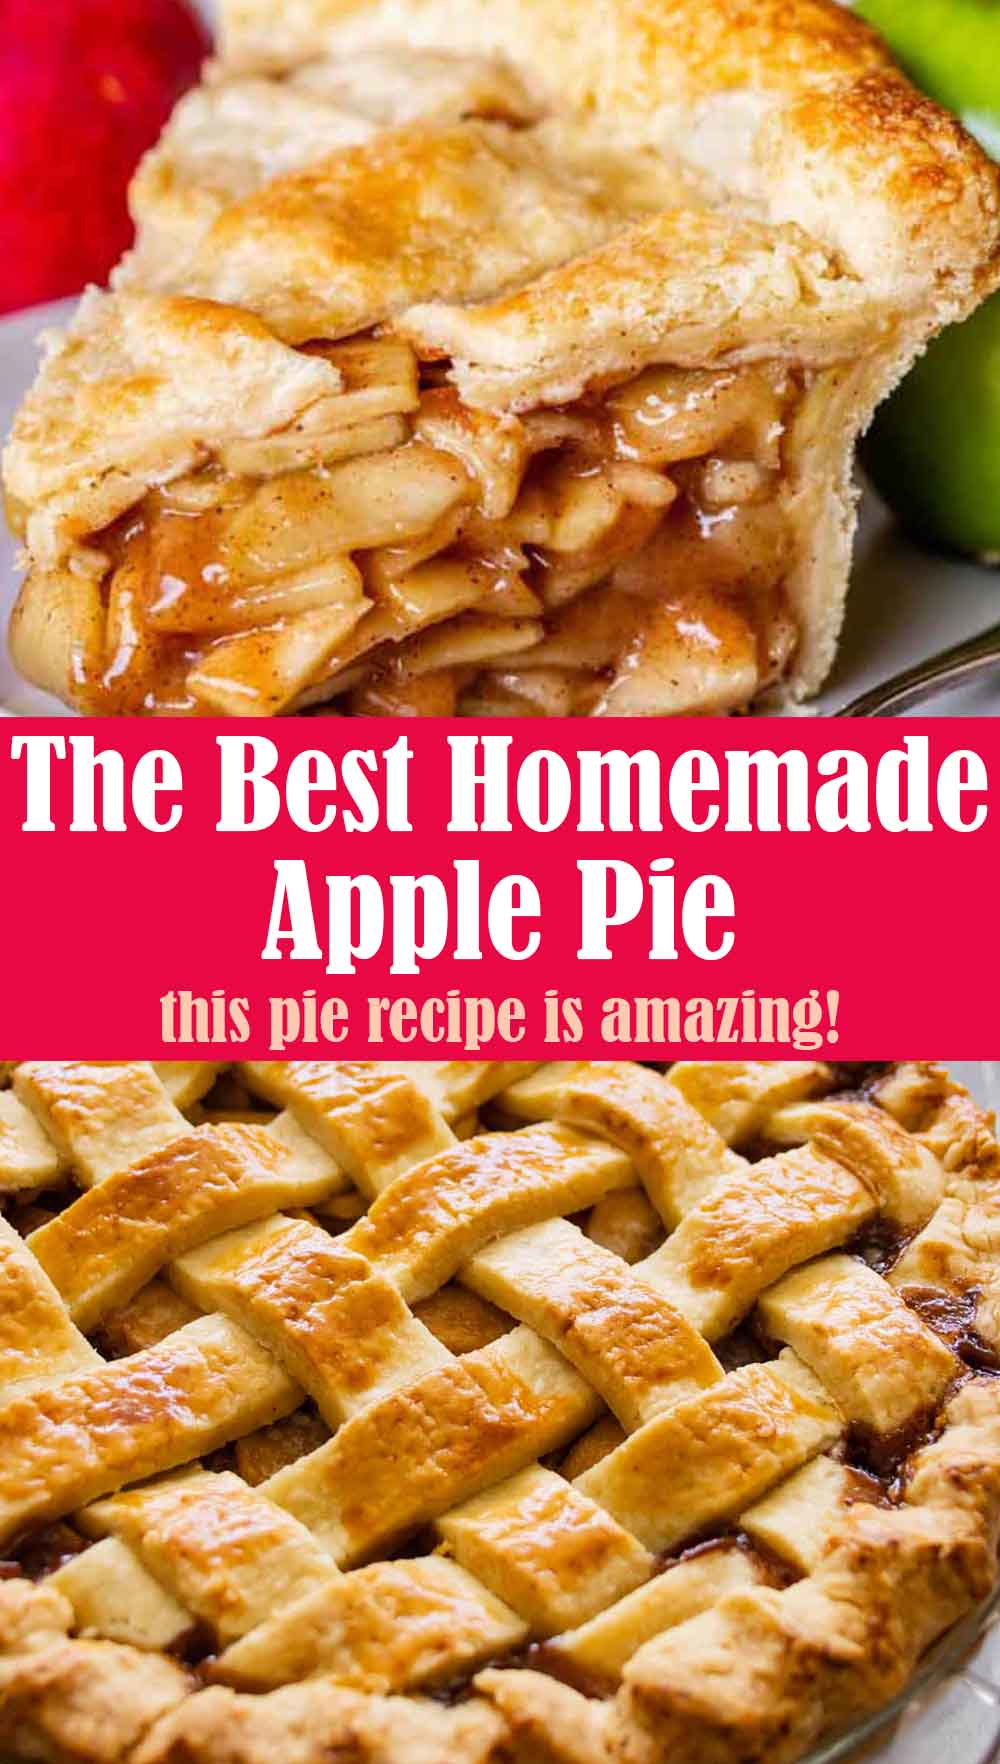 The Best Homemade Apple Pie